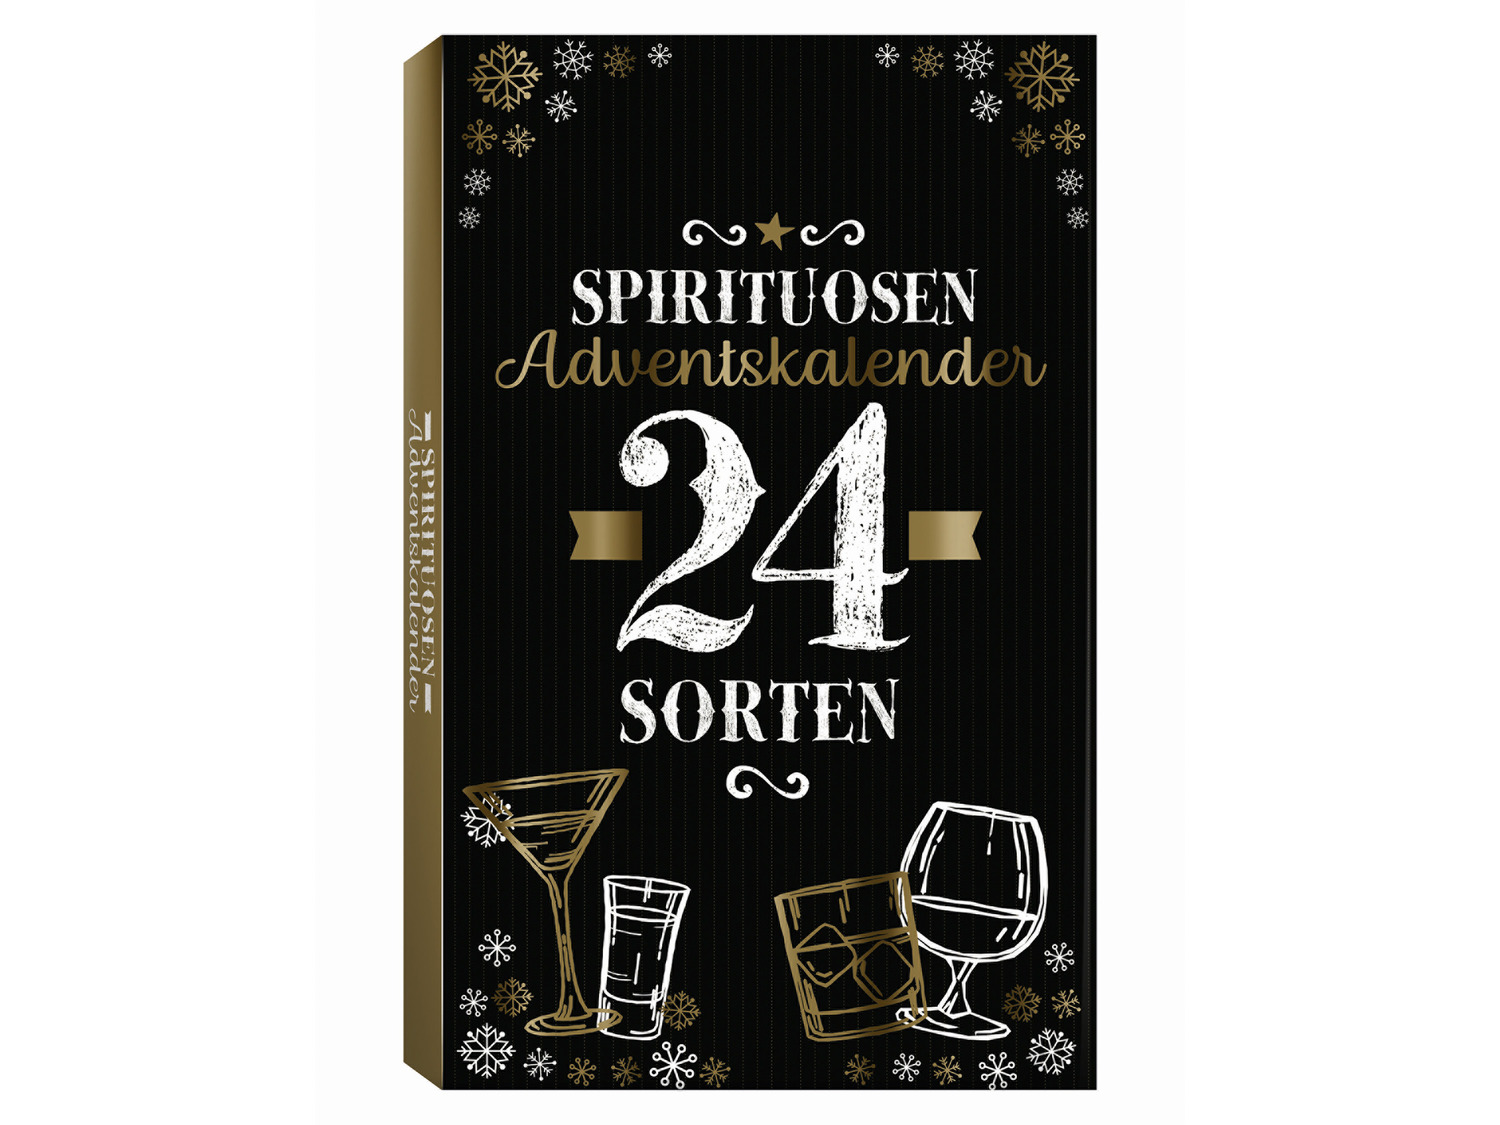 Spirituosen 15-41% 24 02l 0 Vol Adventskalender x